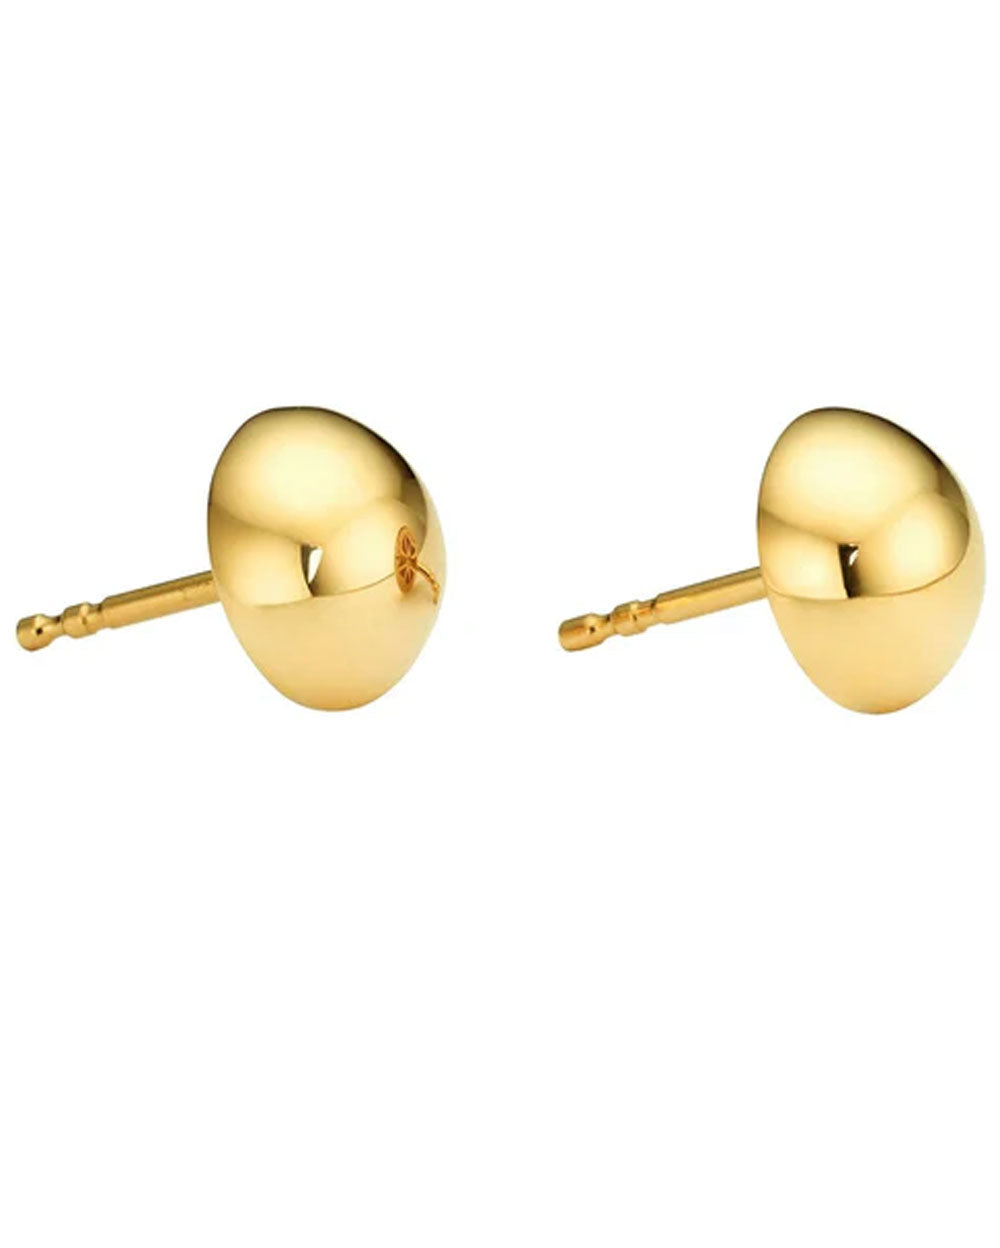 Medium Gold Stud Earrings #9